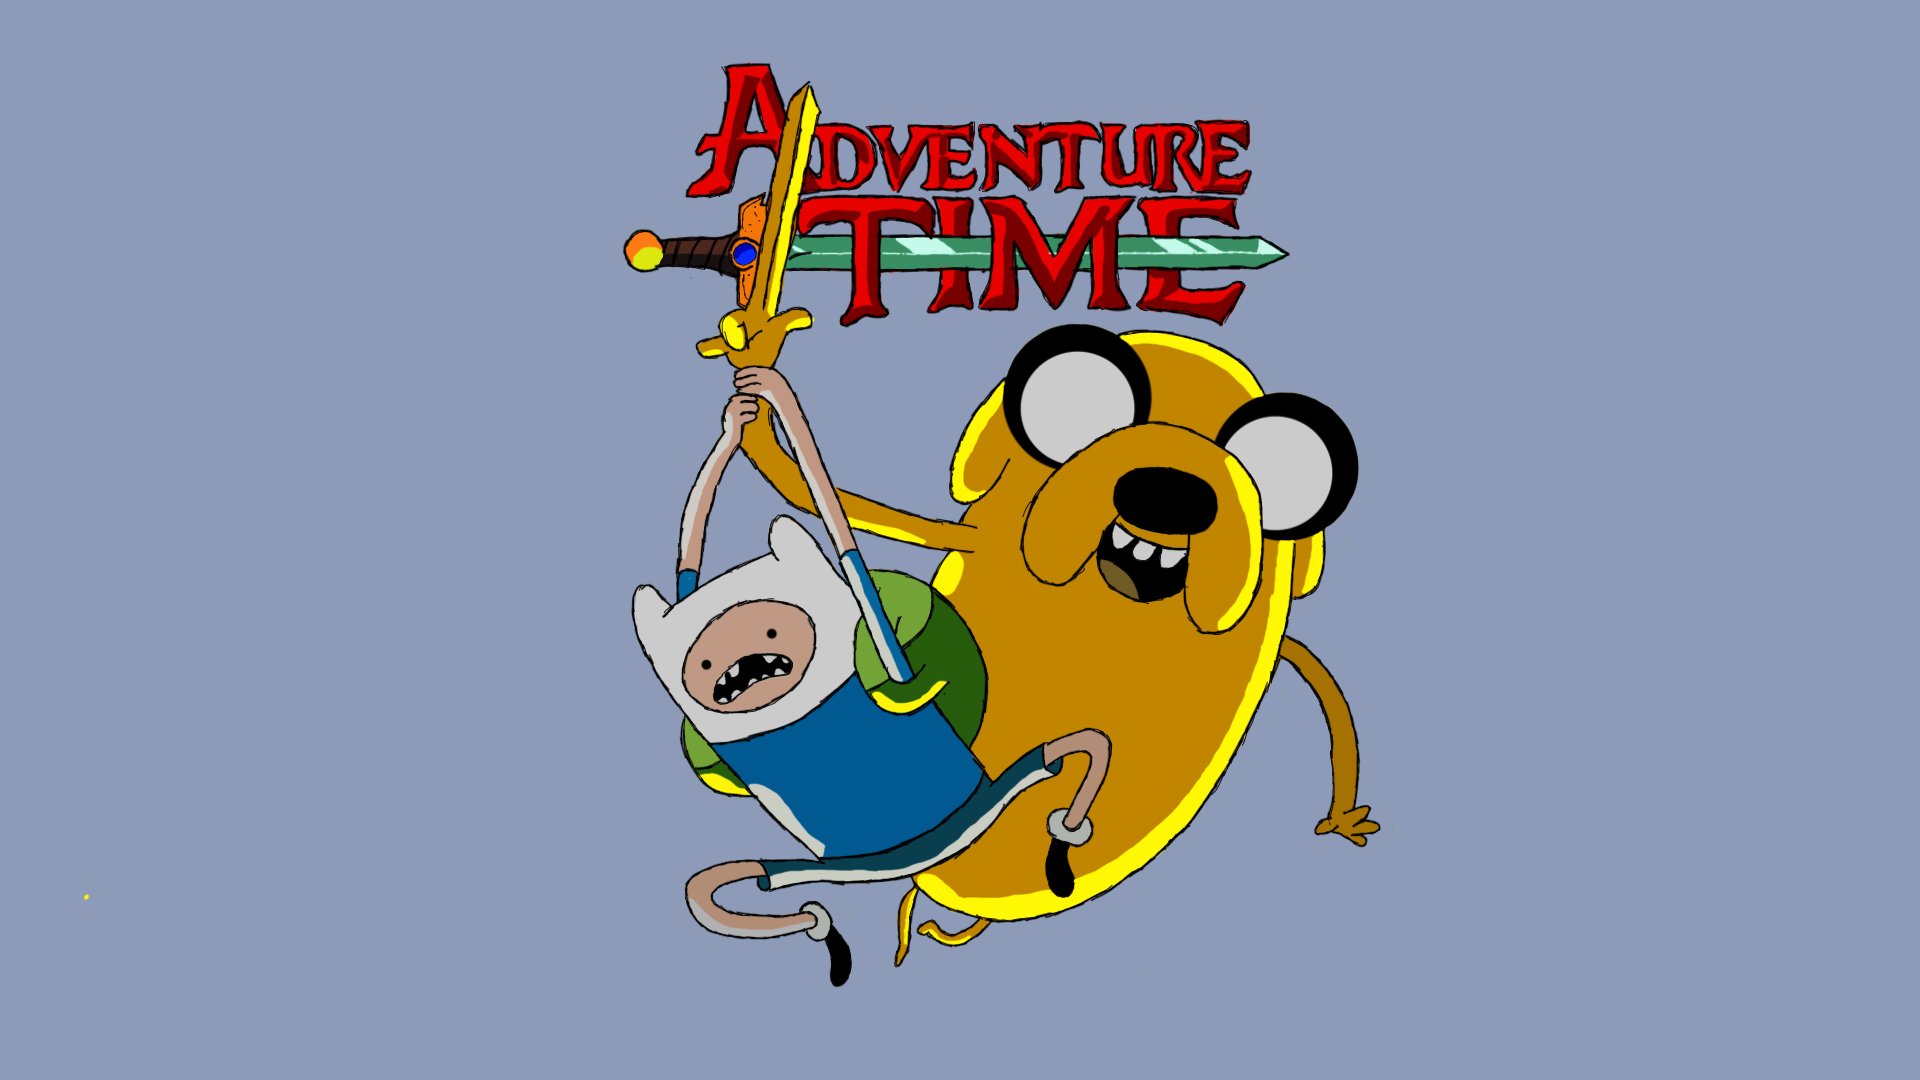 Обои на рабочий стол Adventure time